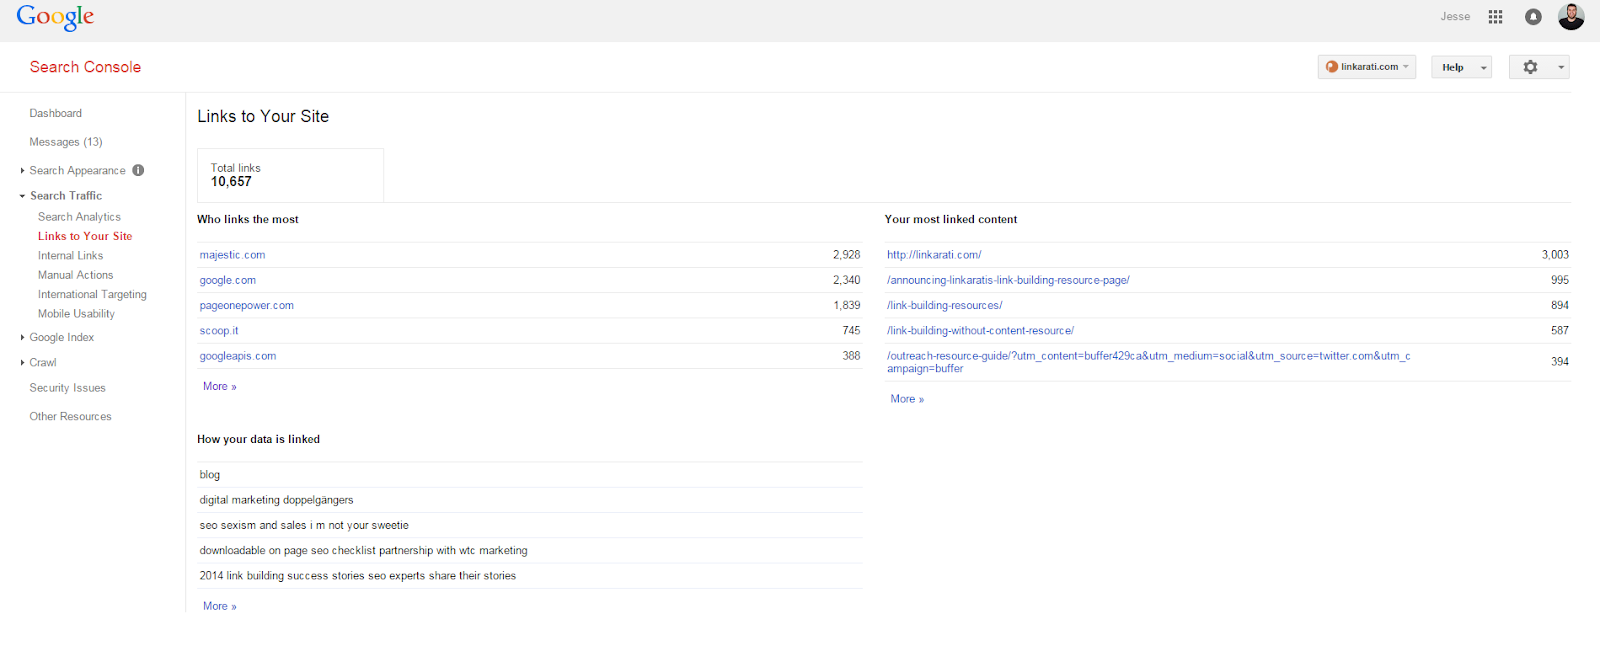 Google Search Console Screenshot